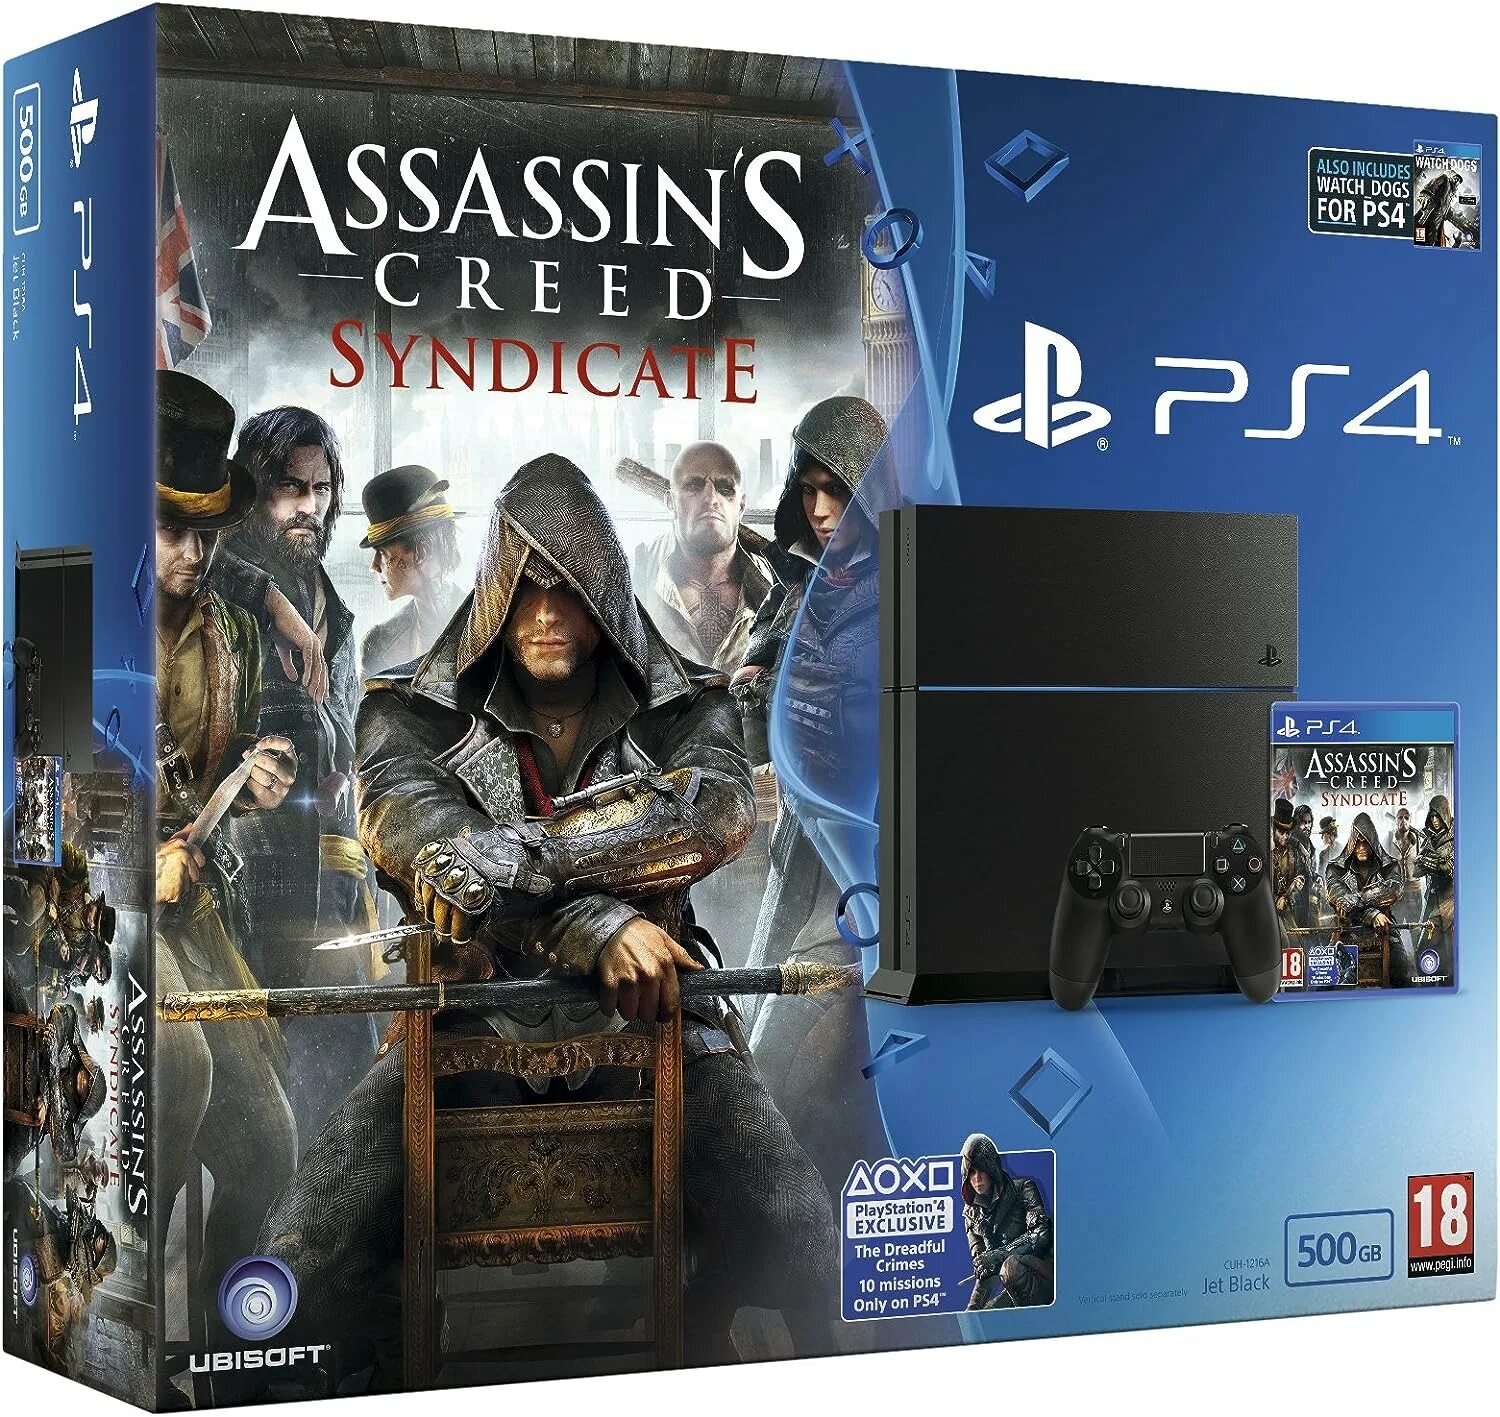 Метро игра плейстейшен. Ps4 диск Assassins Creed 1. PLAYSTATION 4 диски ассасин 2. Ассасин Крид Синдикат диск ПС 4. Assassin's Creed Синдикат ps4 диск.